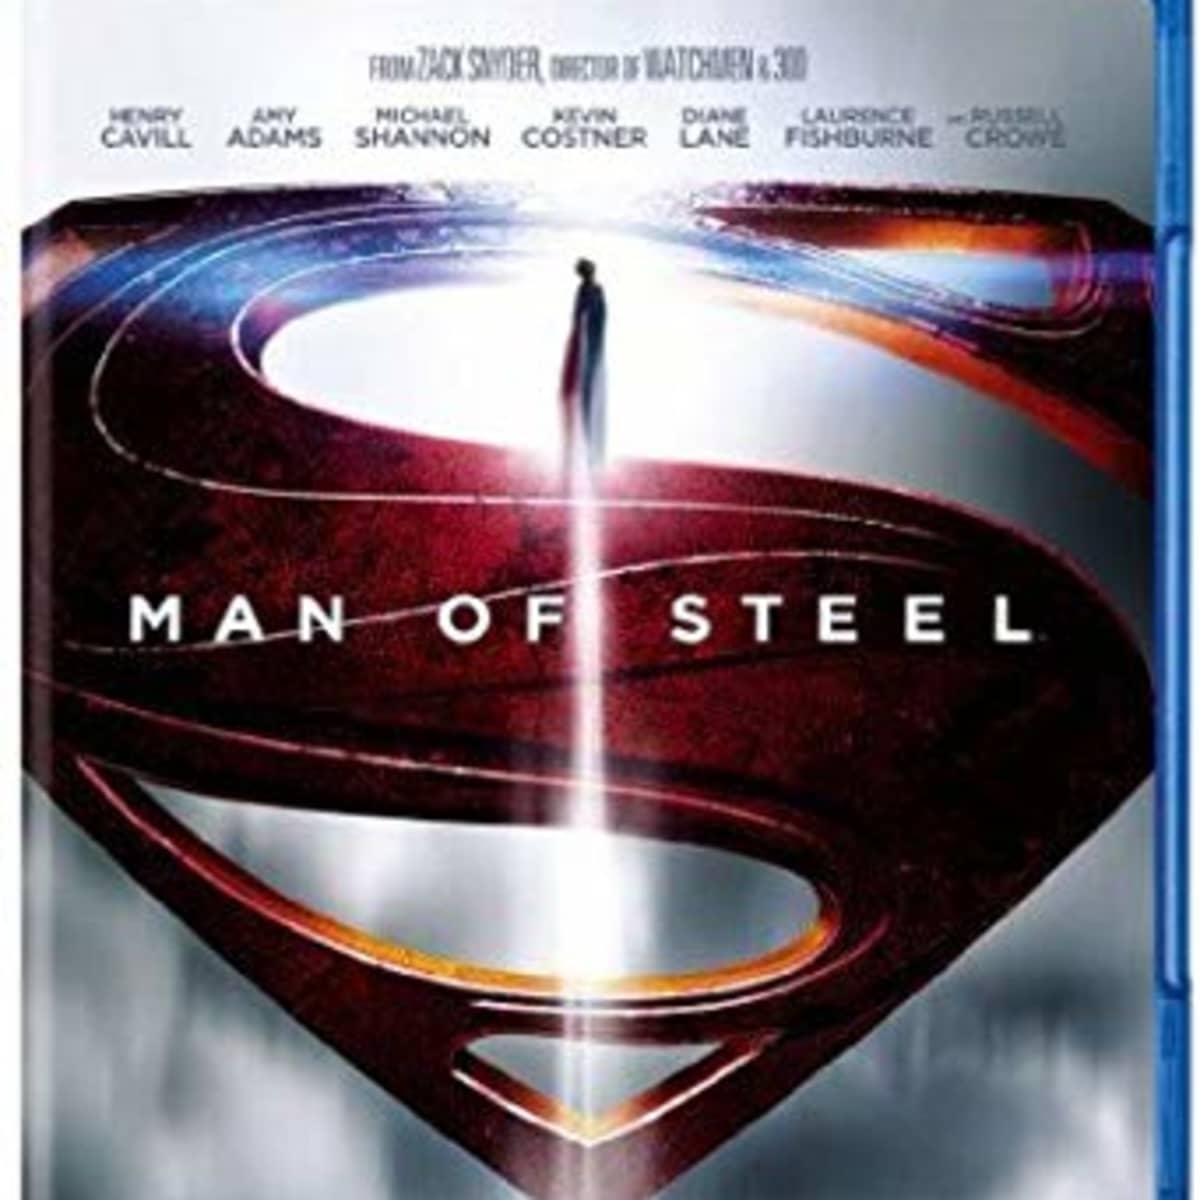 Movie Review: Man of Steel